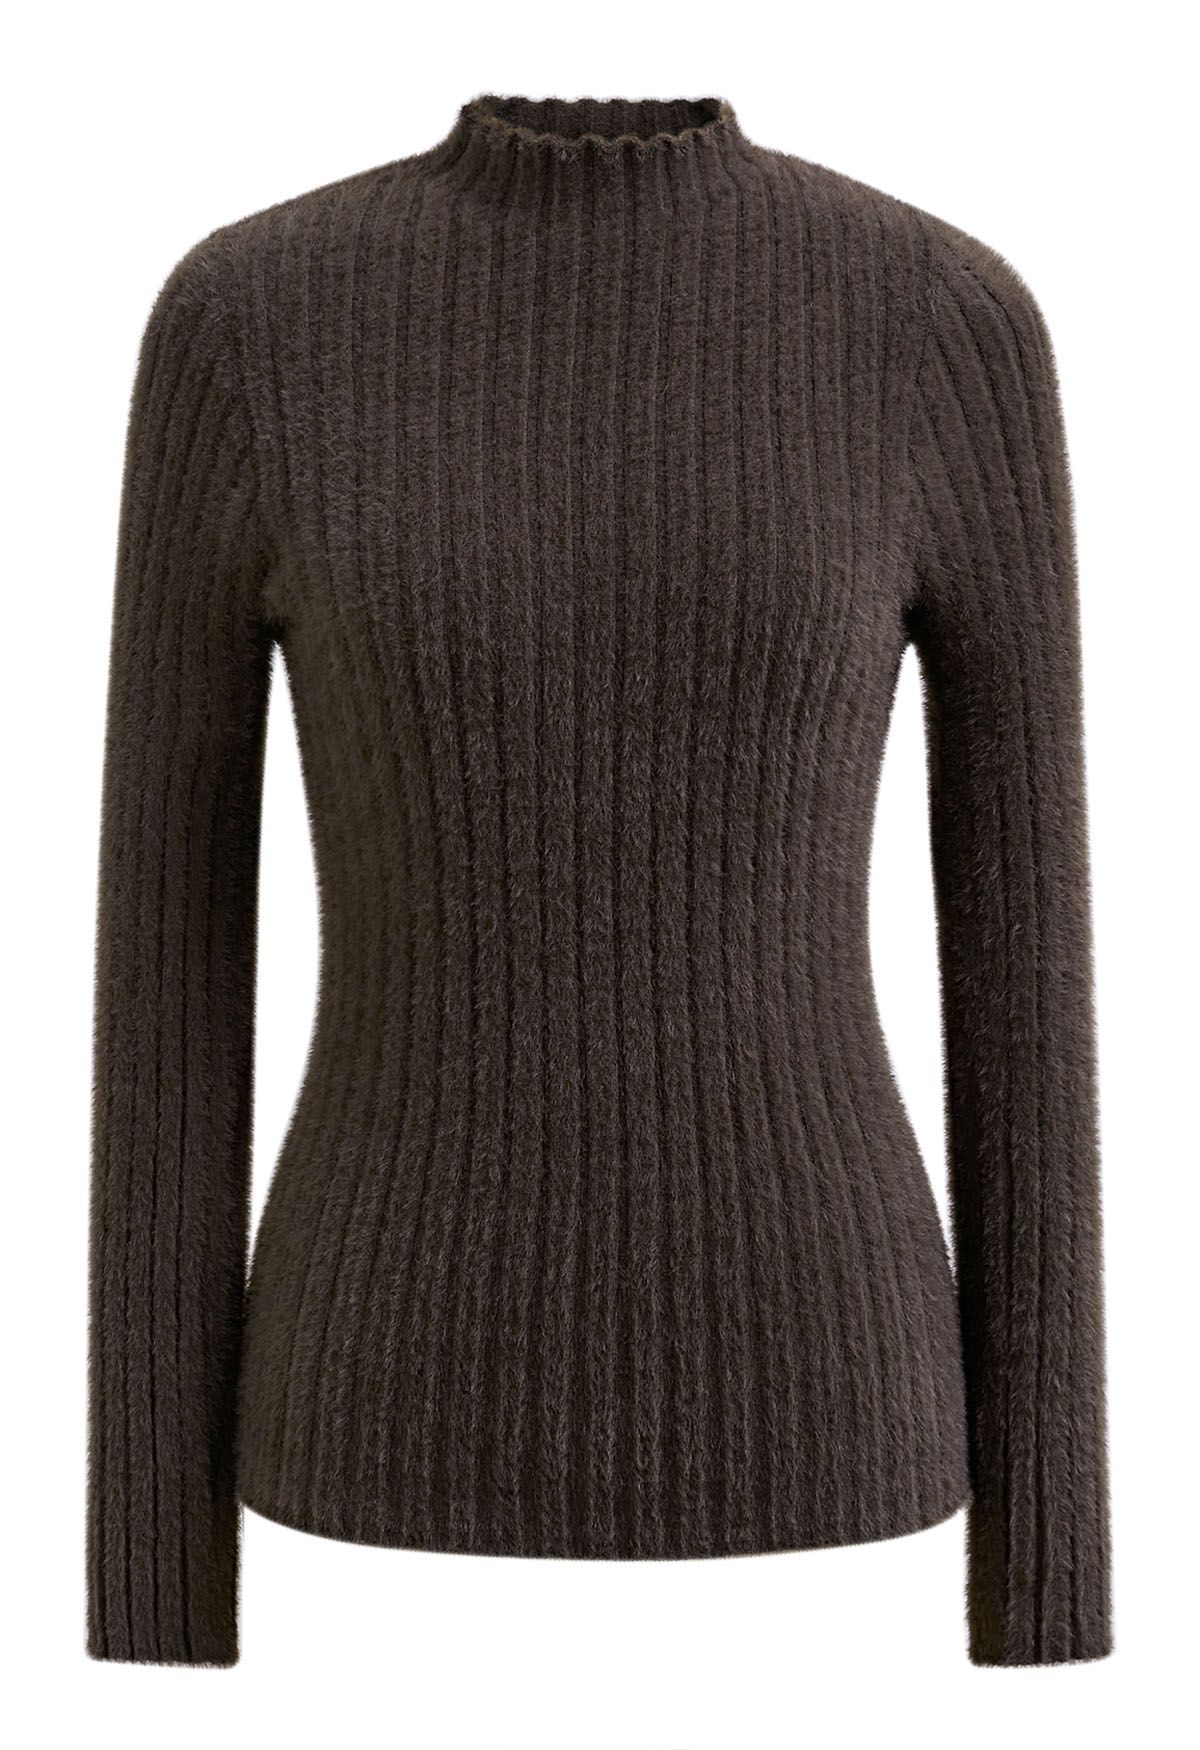 Rib-knit top - Dark grey - Ladies